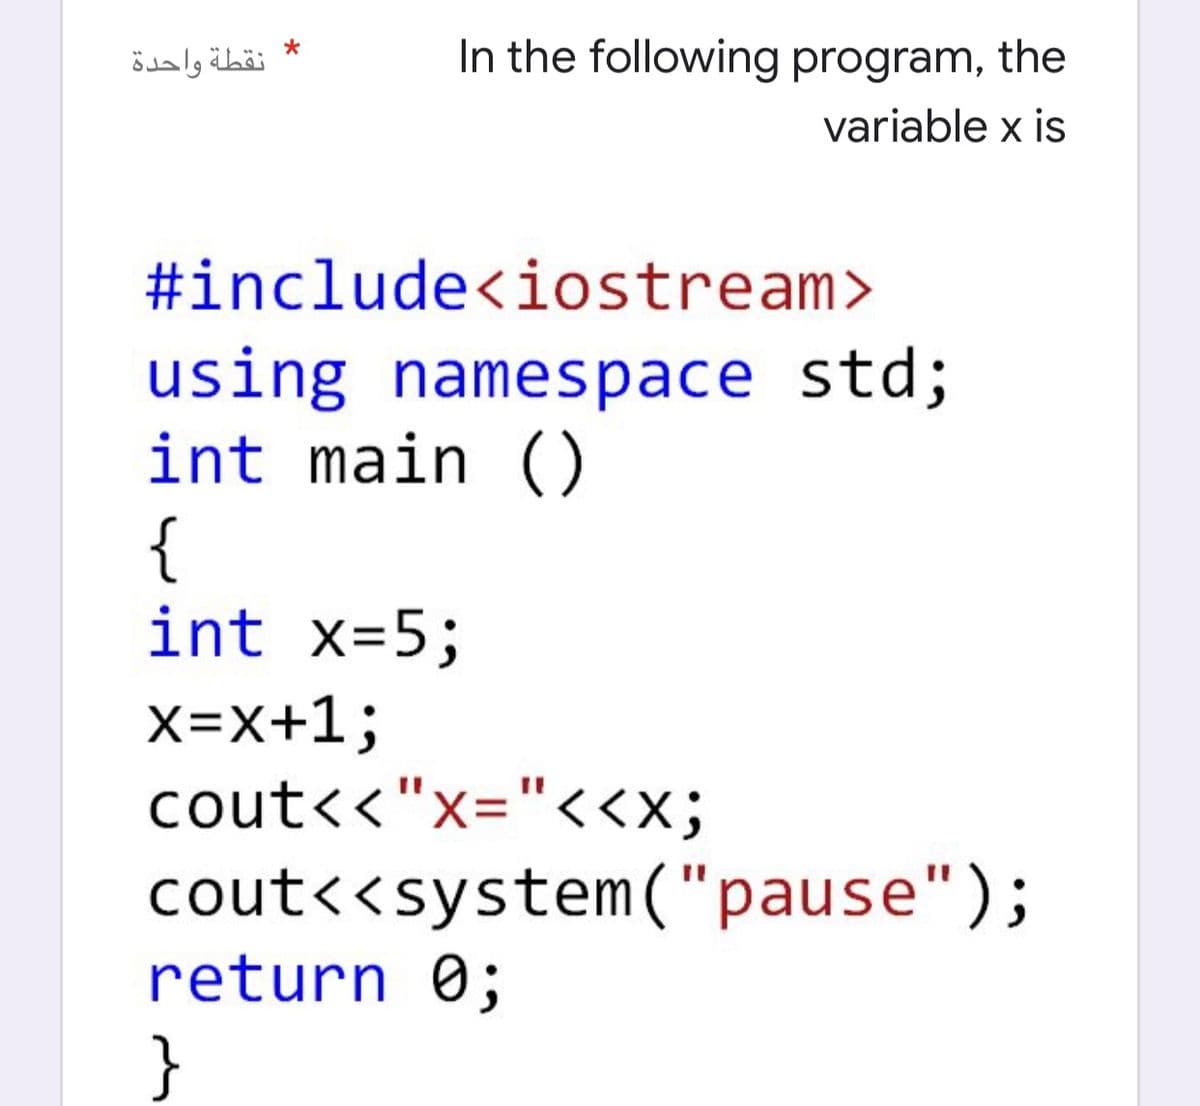 نقطة واحدة
In the following program, the
variable x is
#include<iostream>
using namespace std;
int main ()
{
int x=5;
X=X+1;
cout<<"x="<<x;
cout<<system("pause");
return 0;
}